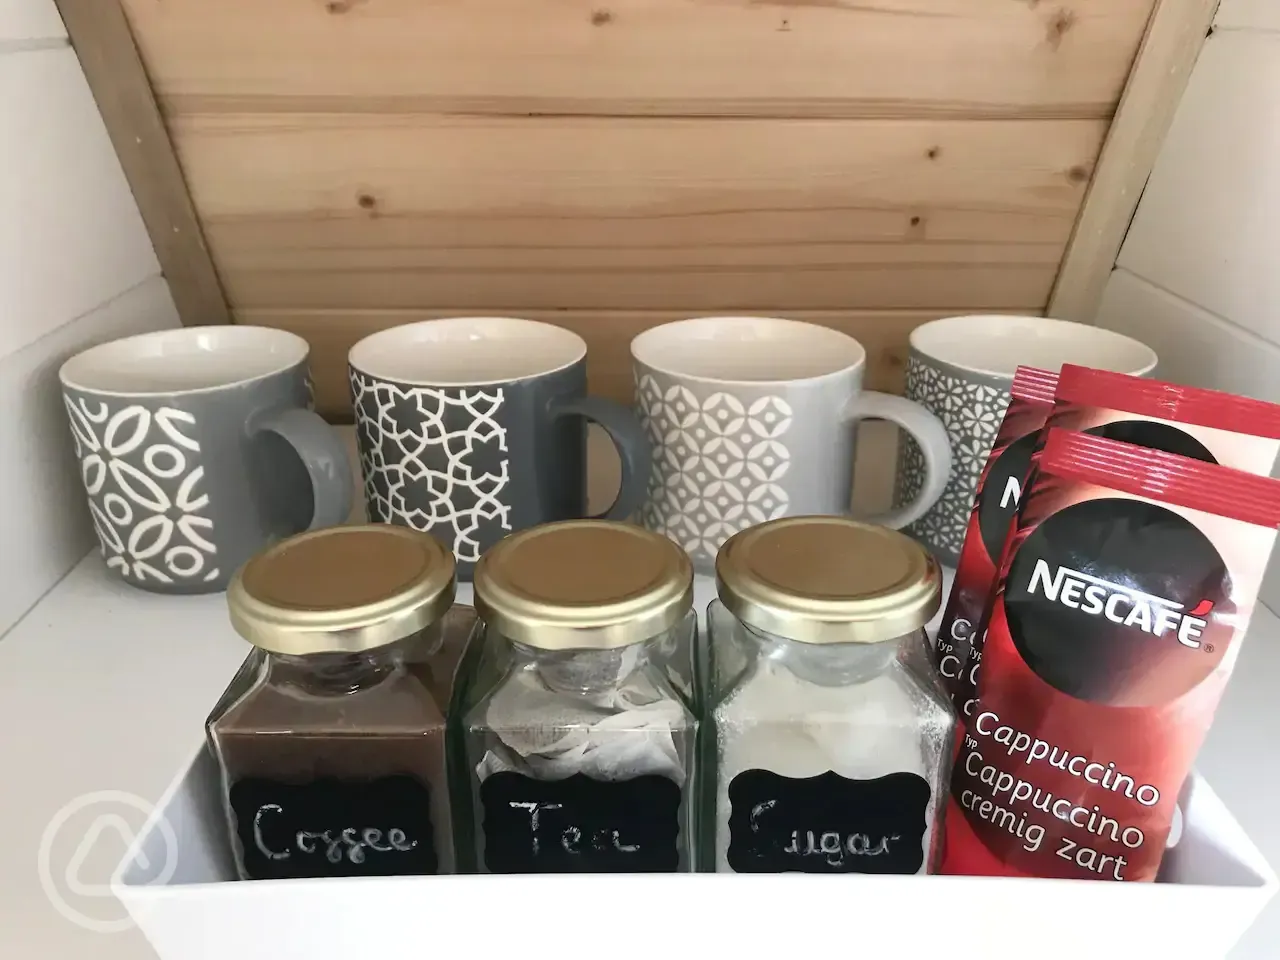 Tea, Coffee, Sugar included in each pod